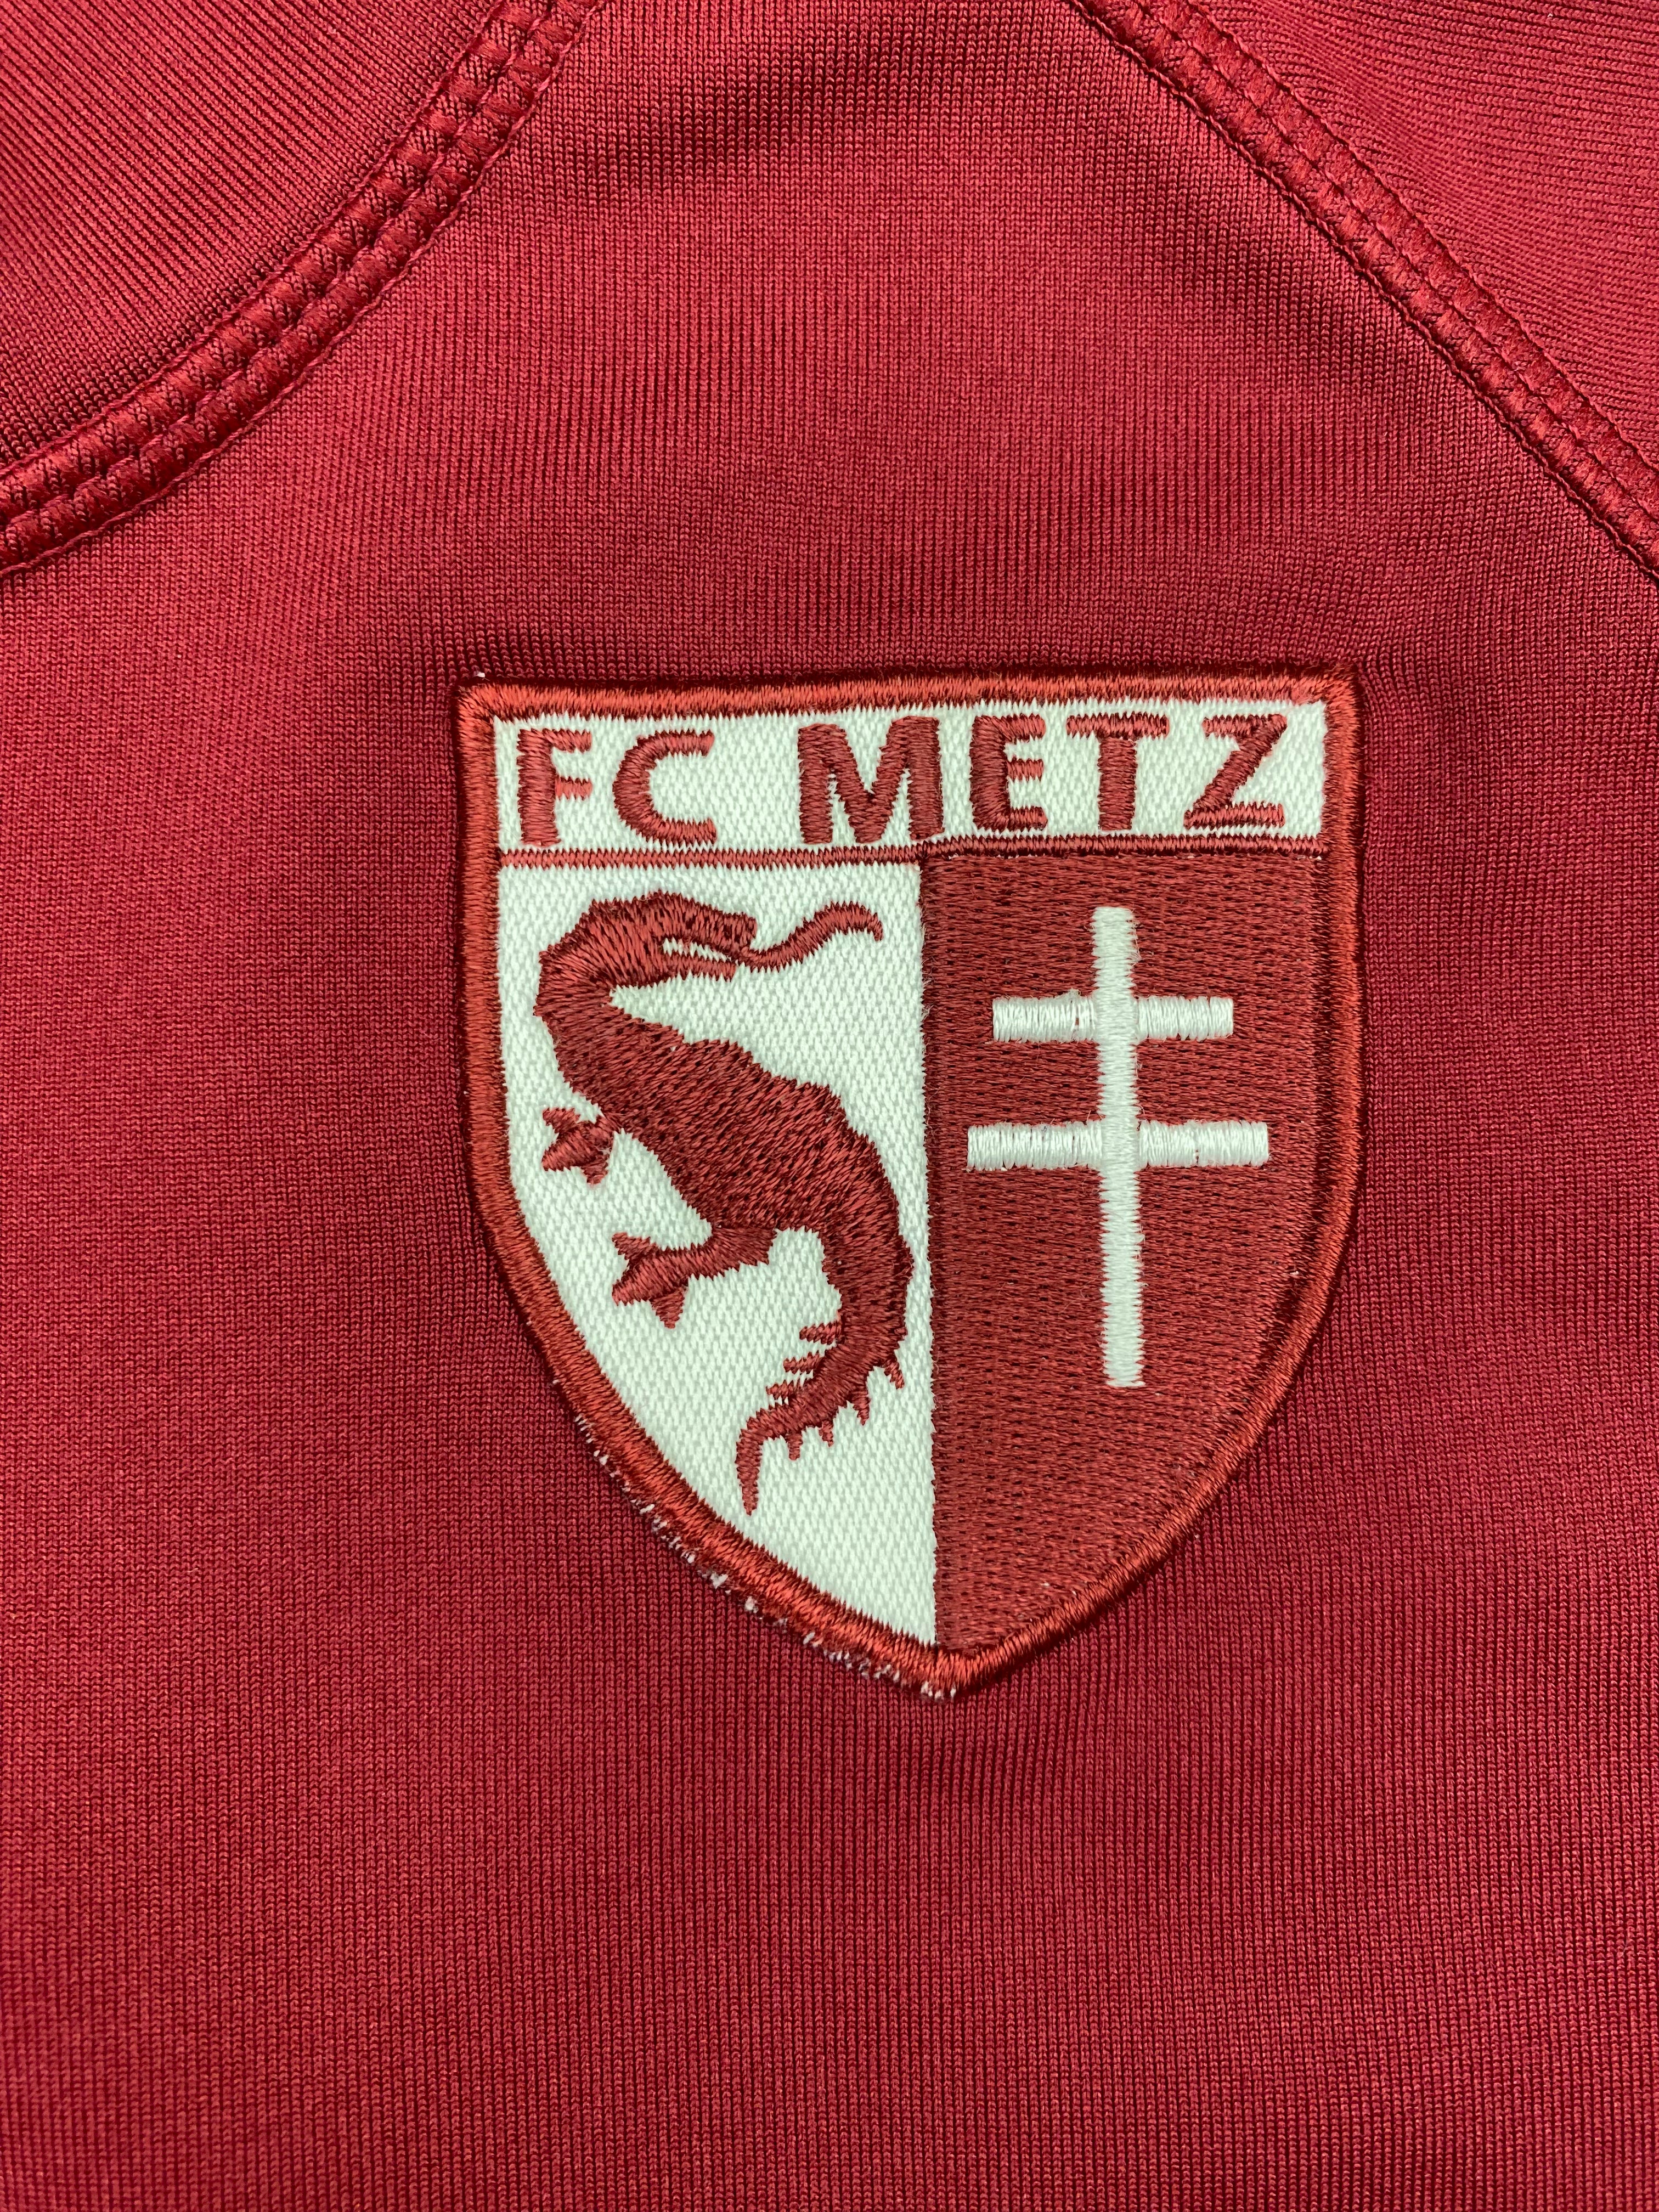 2010/11 Metz Home Shirt #5 (M) 8.5/10